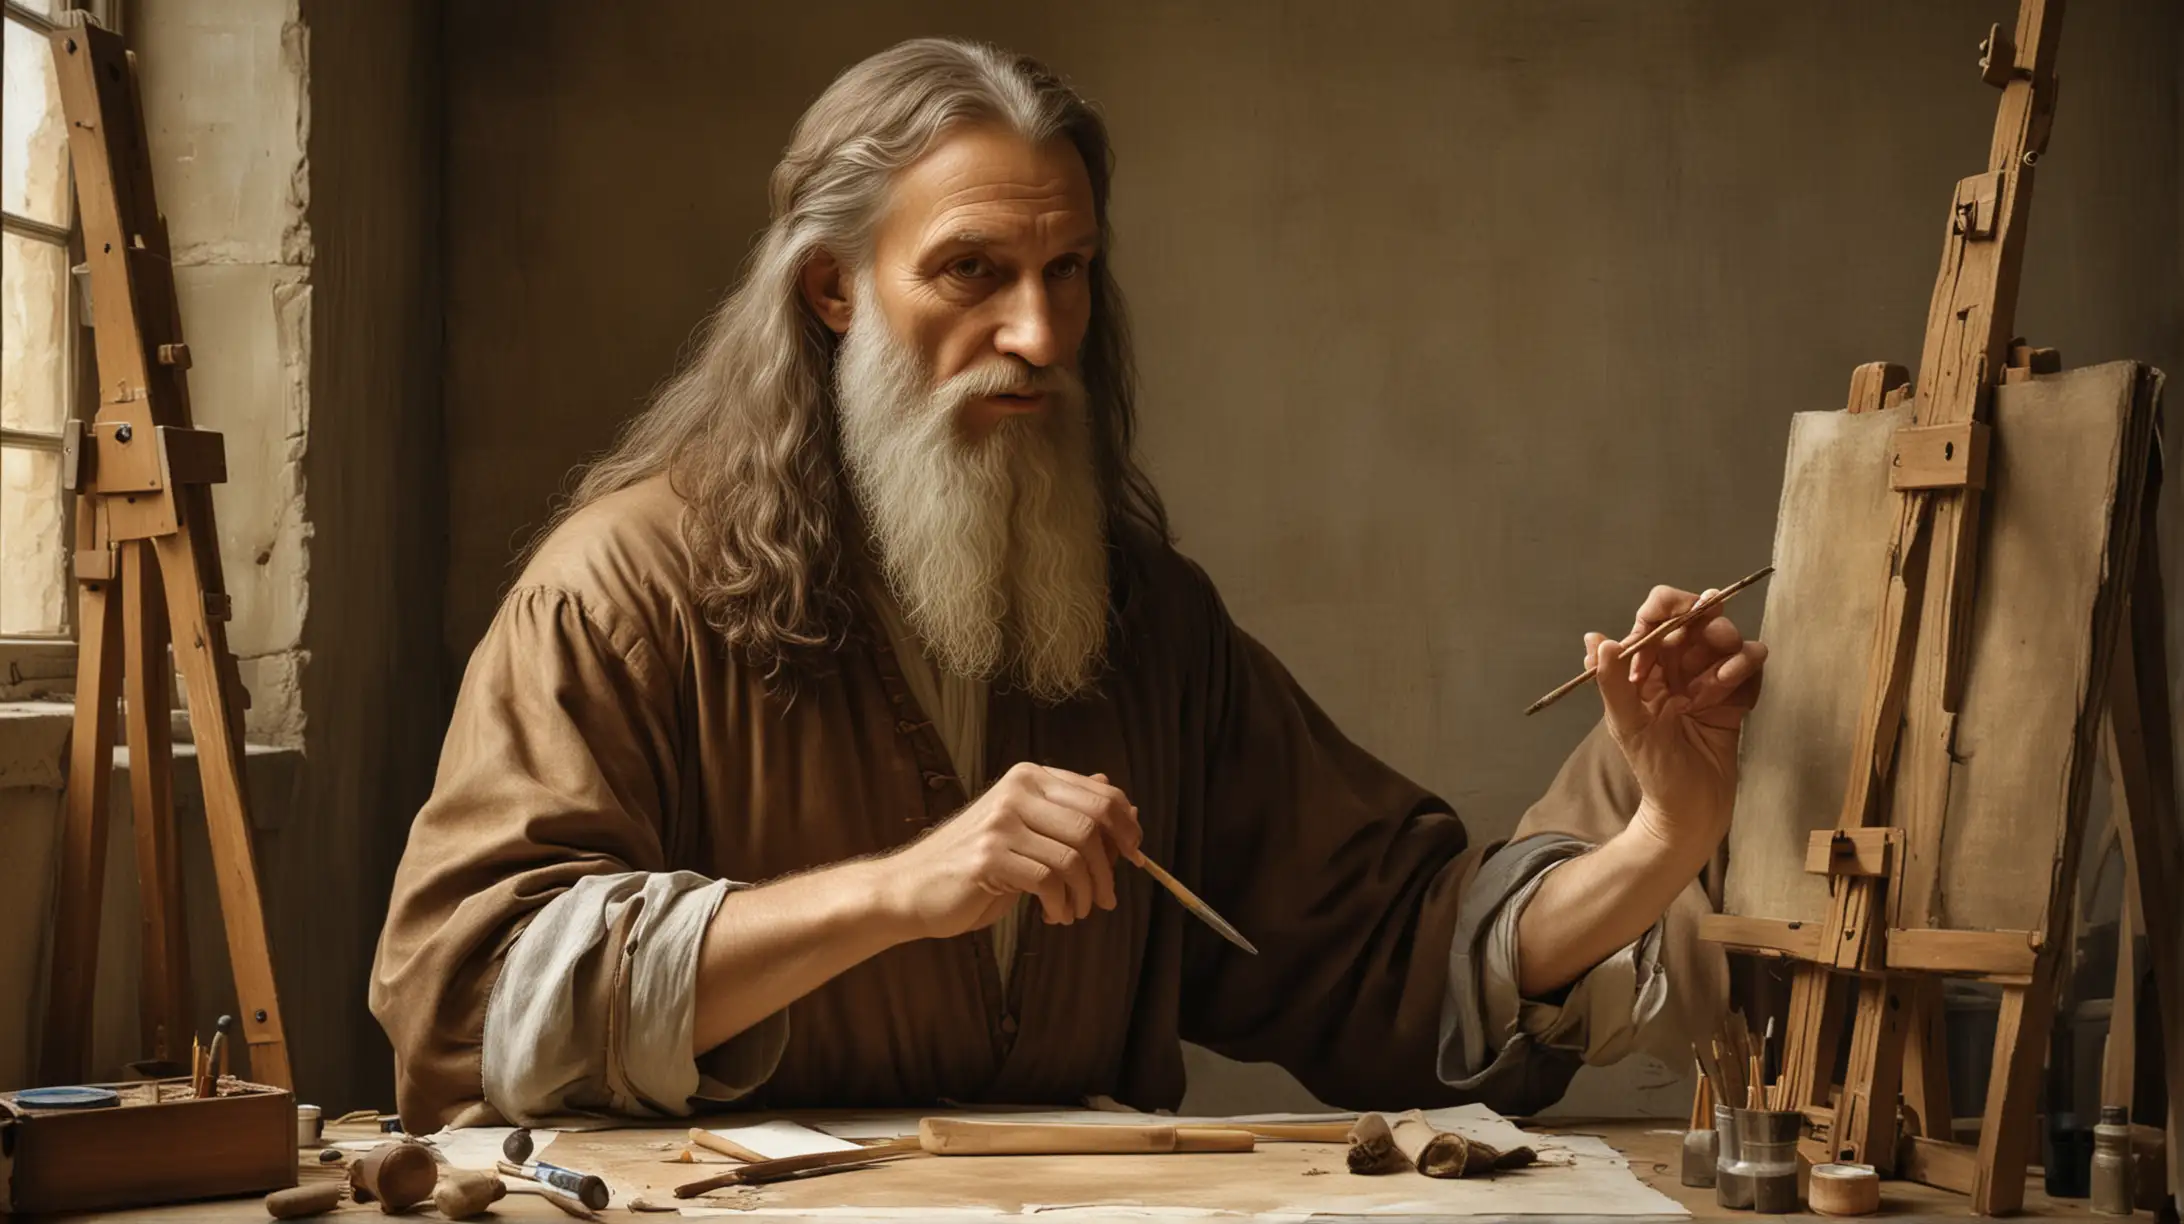 Create an image of Leonardo da Vinci in his studio working on a painting.  